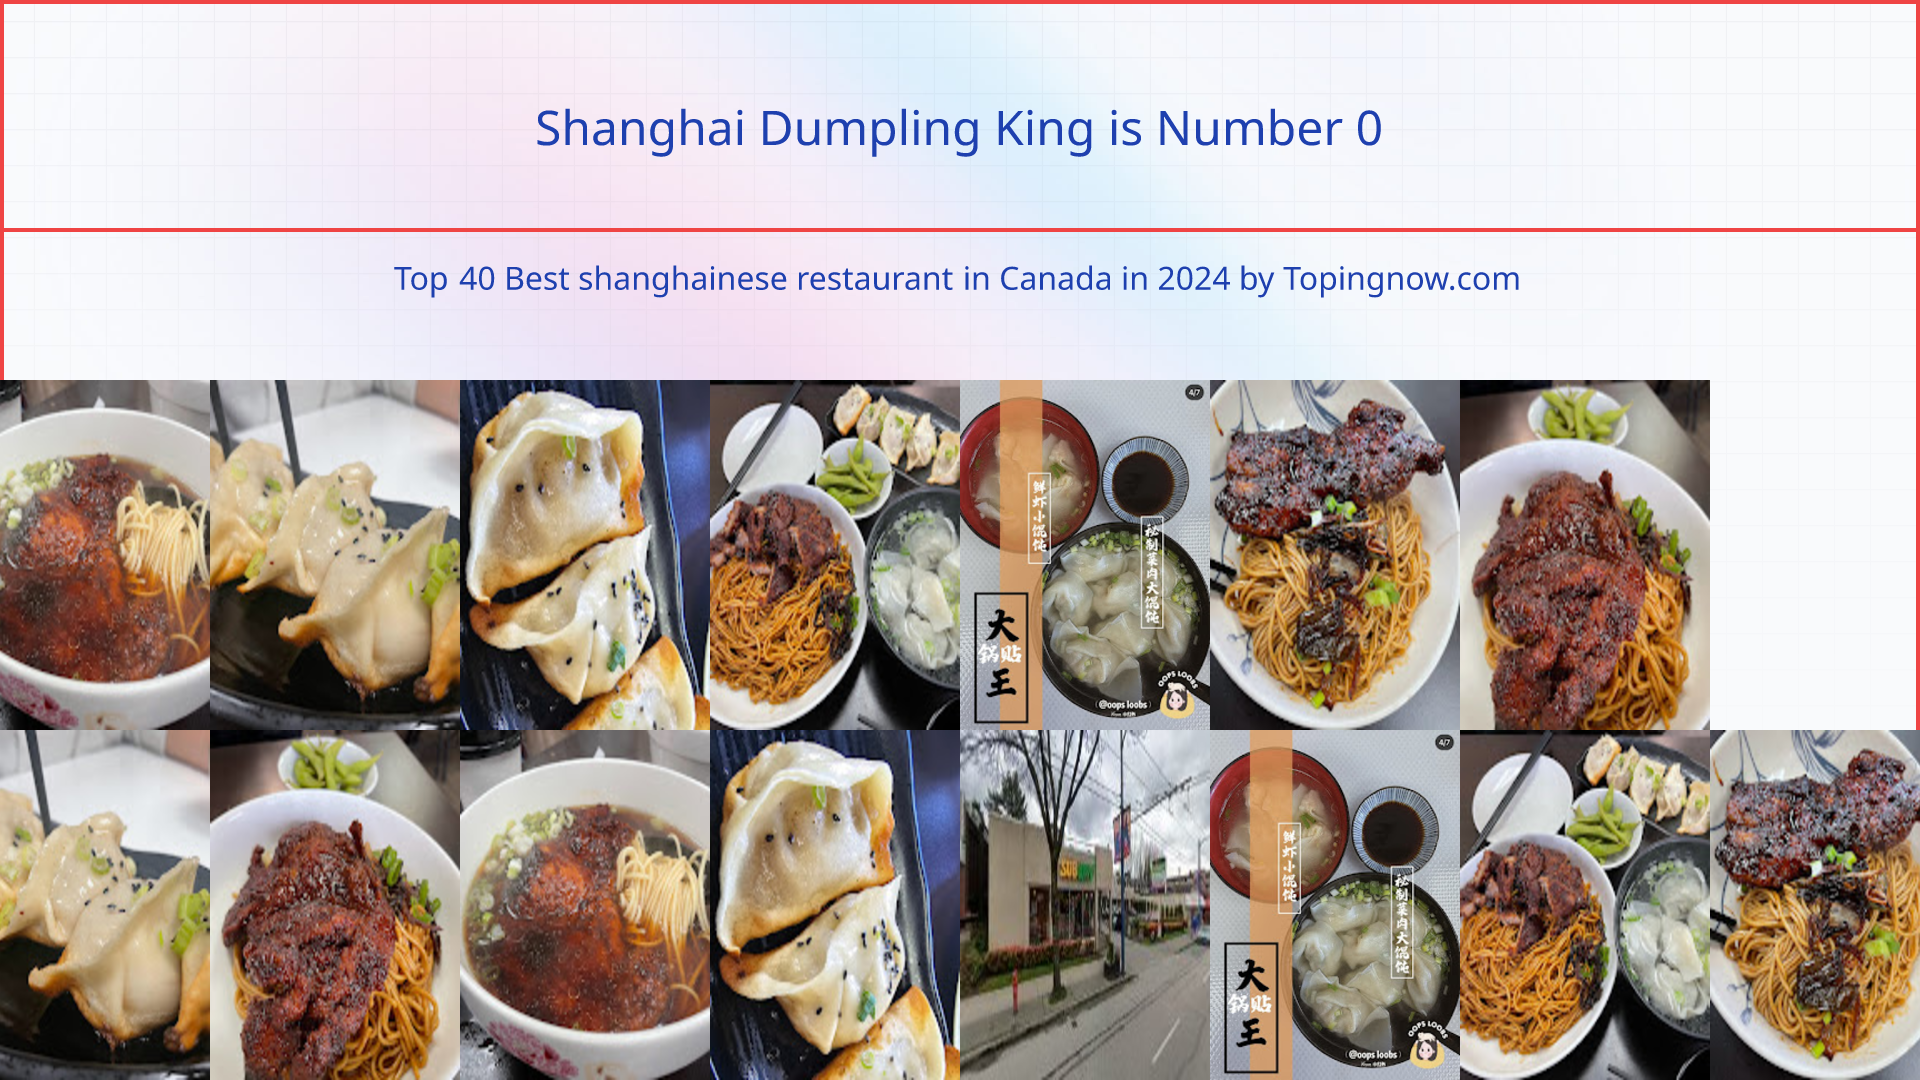 Shanghai Dumpling King: Top 40 Best shanghainese restaurant in Canada in 2024